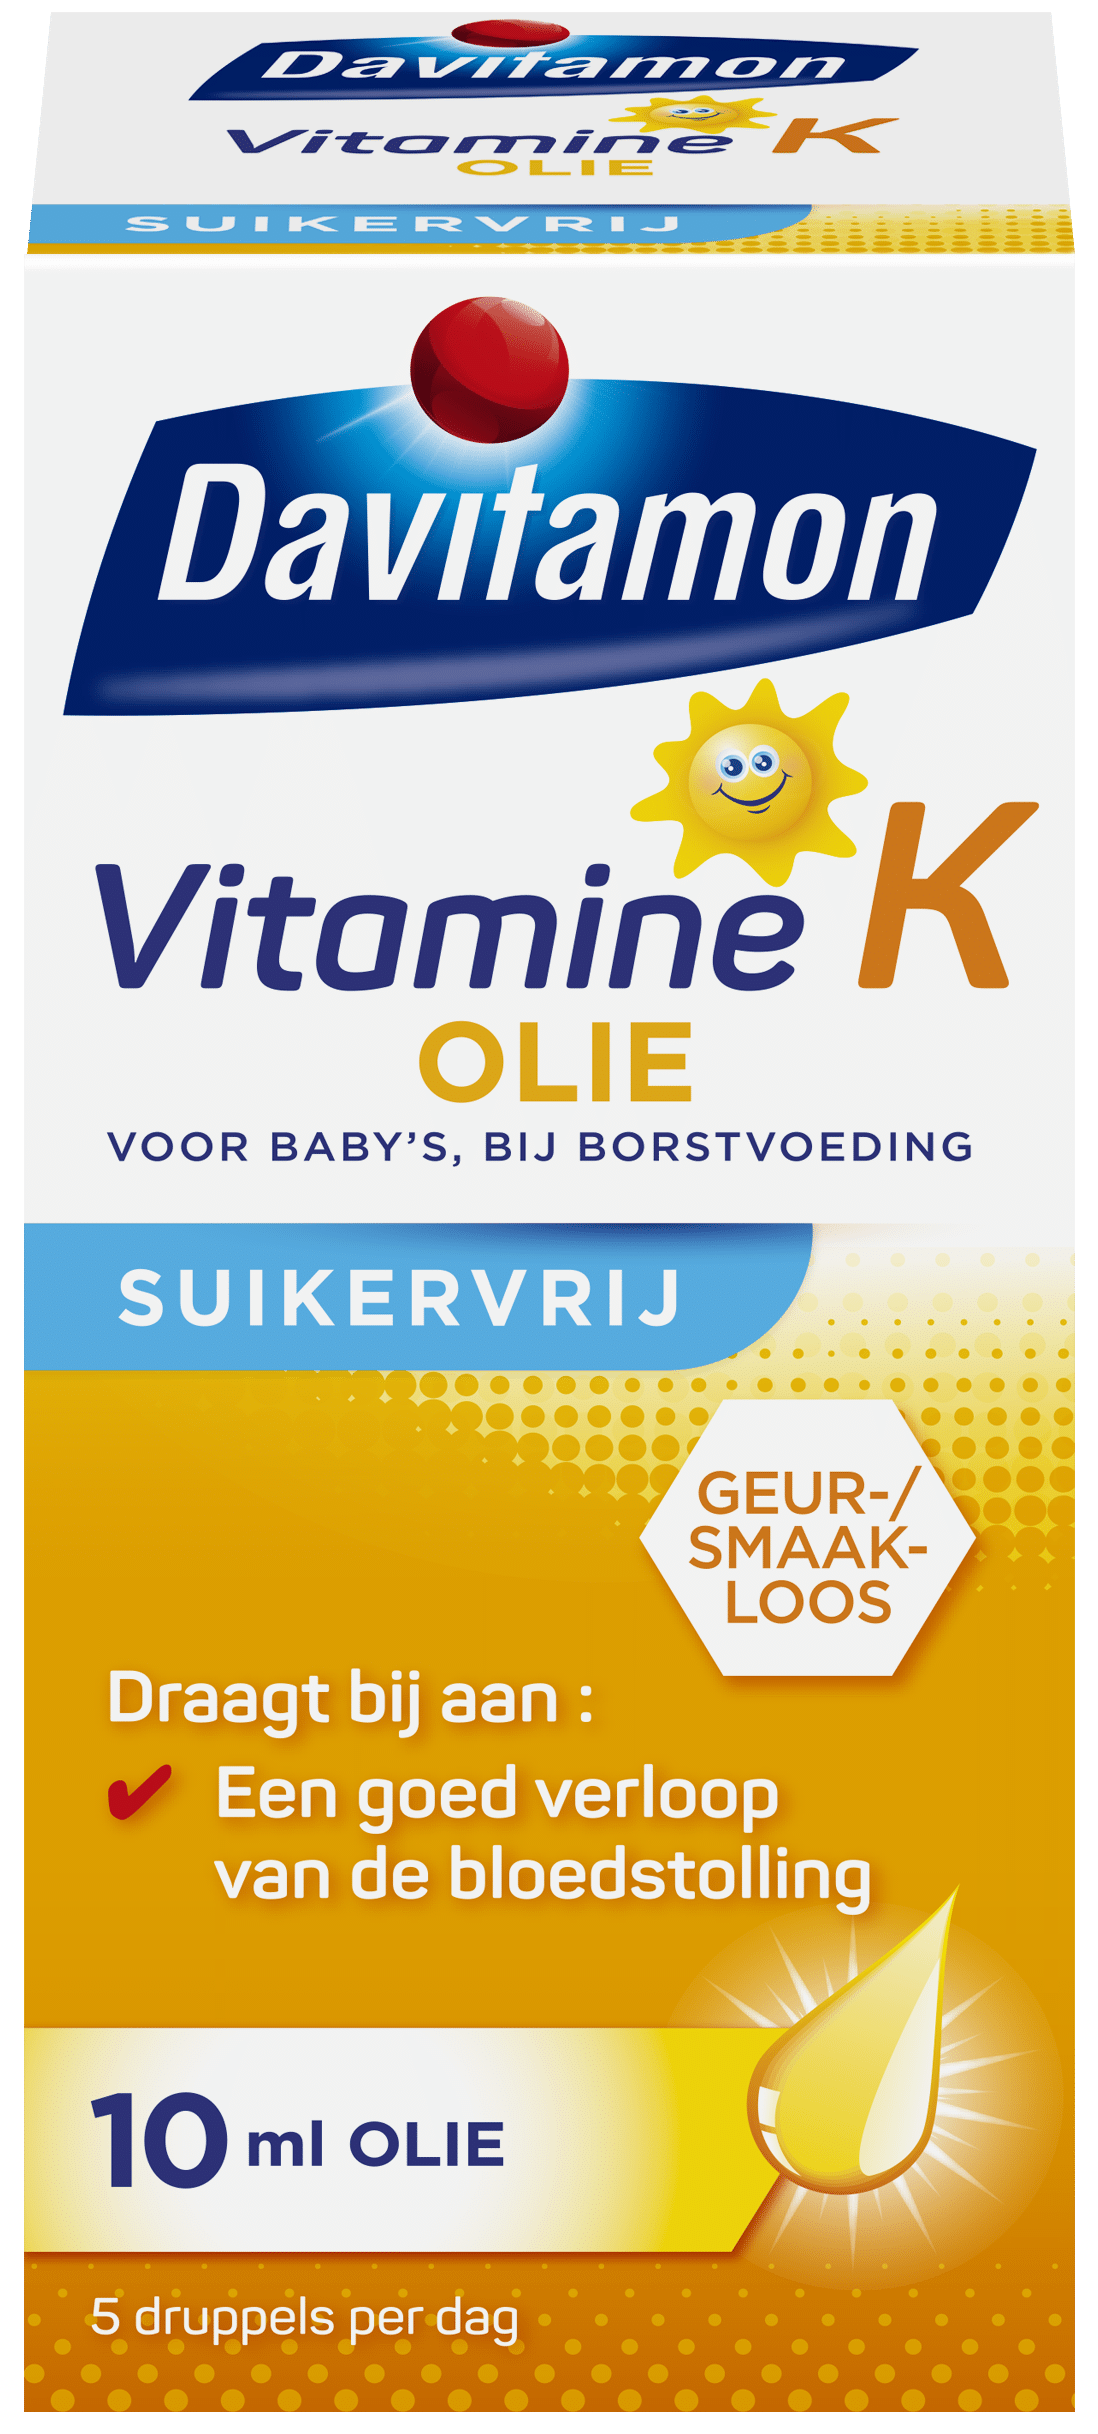 Davitamon Vitamine K Olie – <br>10 ml